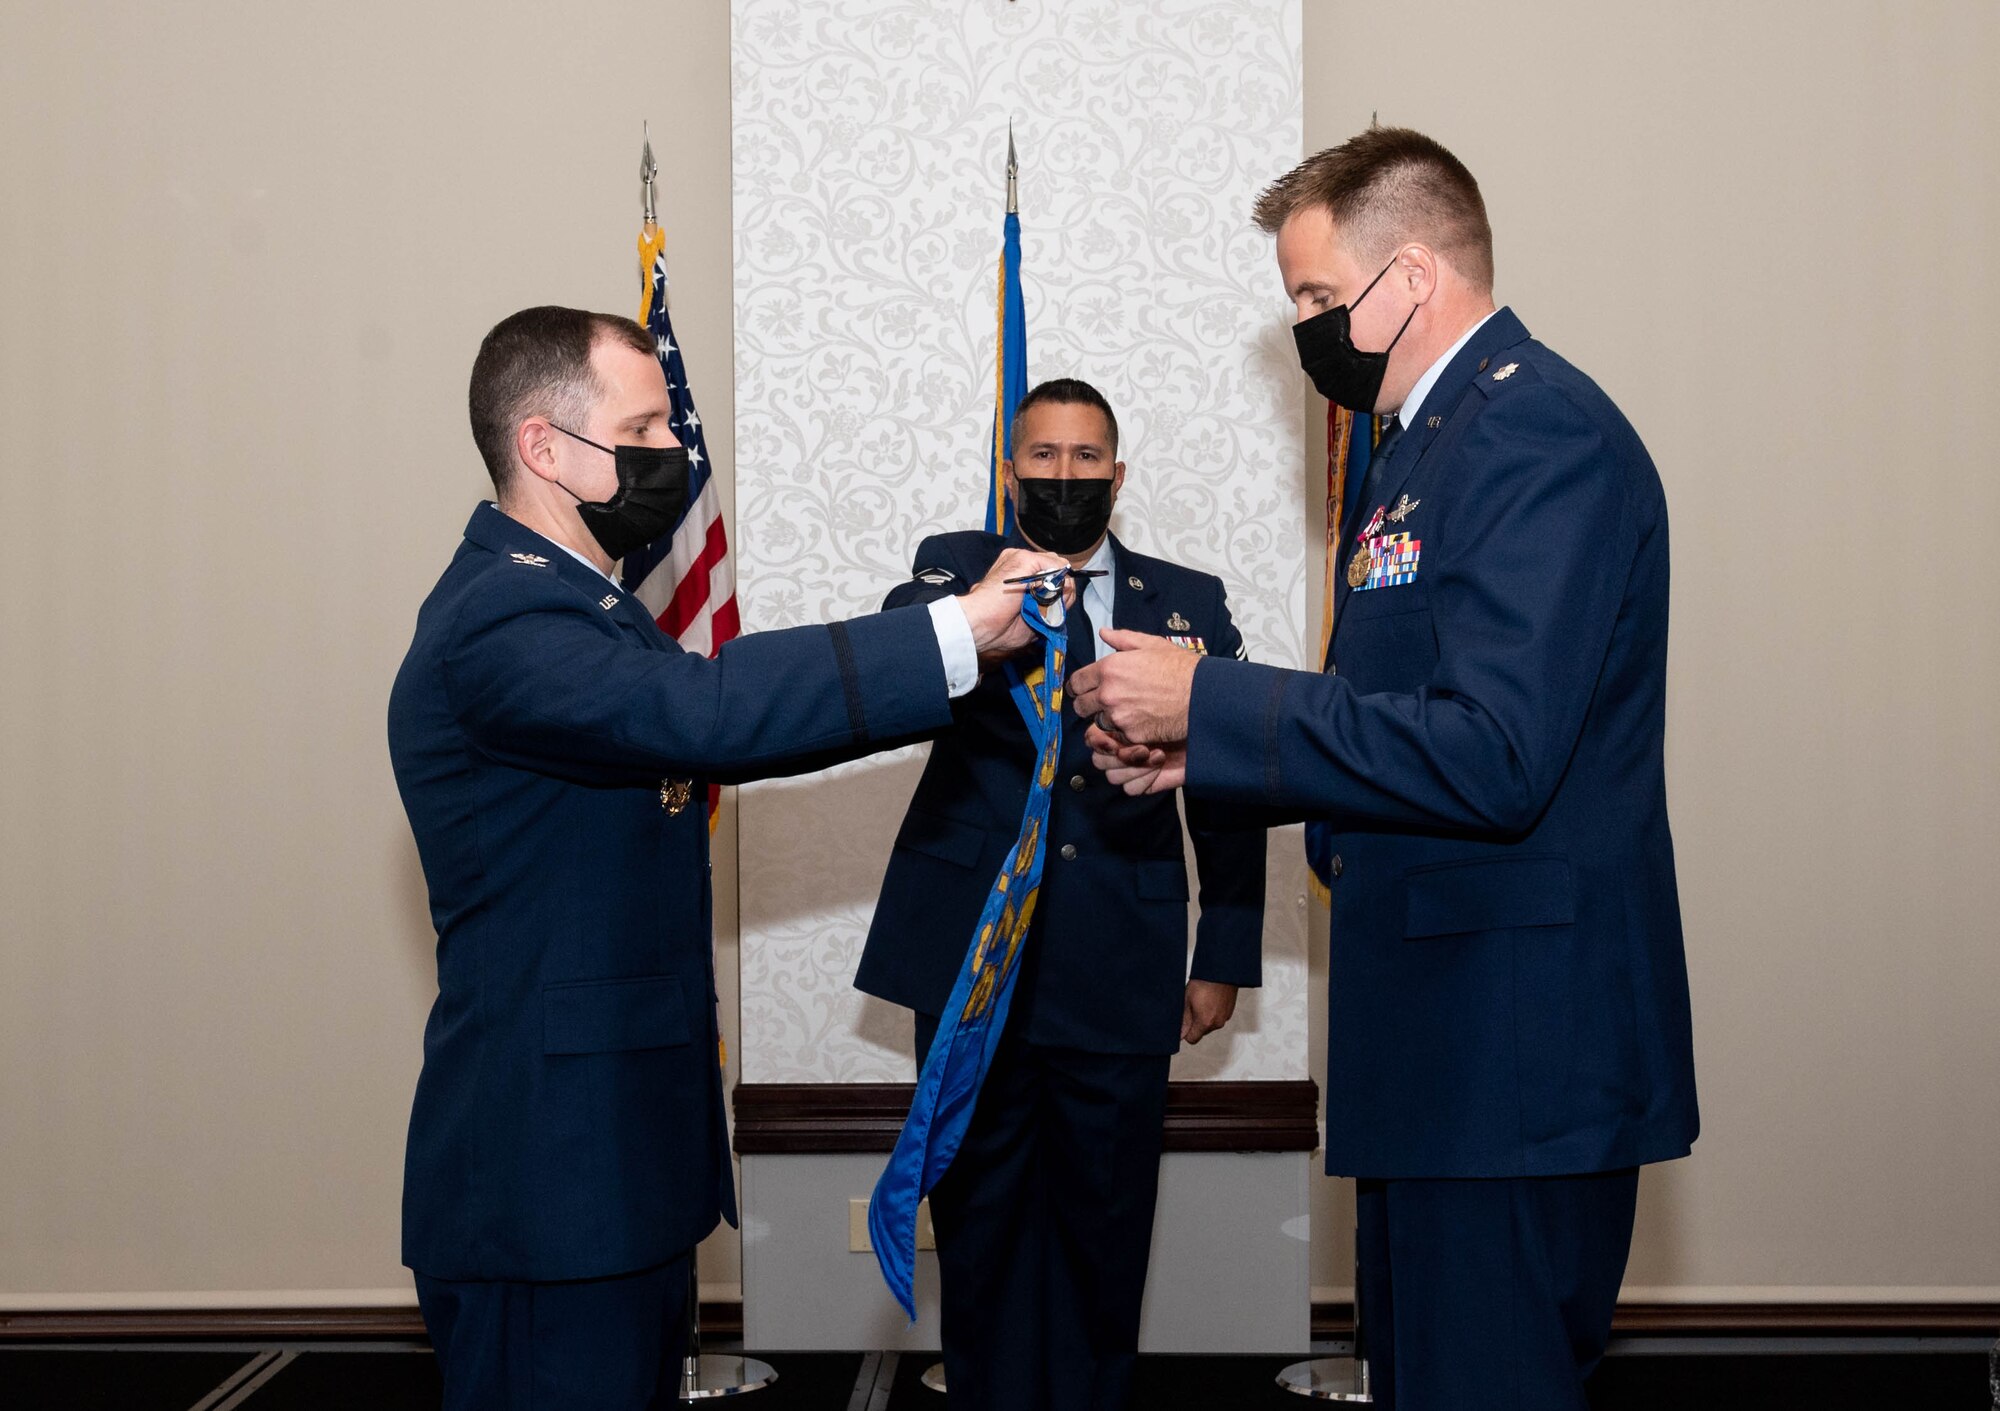 U.S. Airmen take part in ceremony